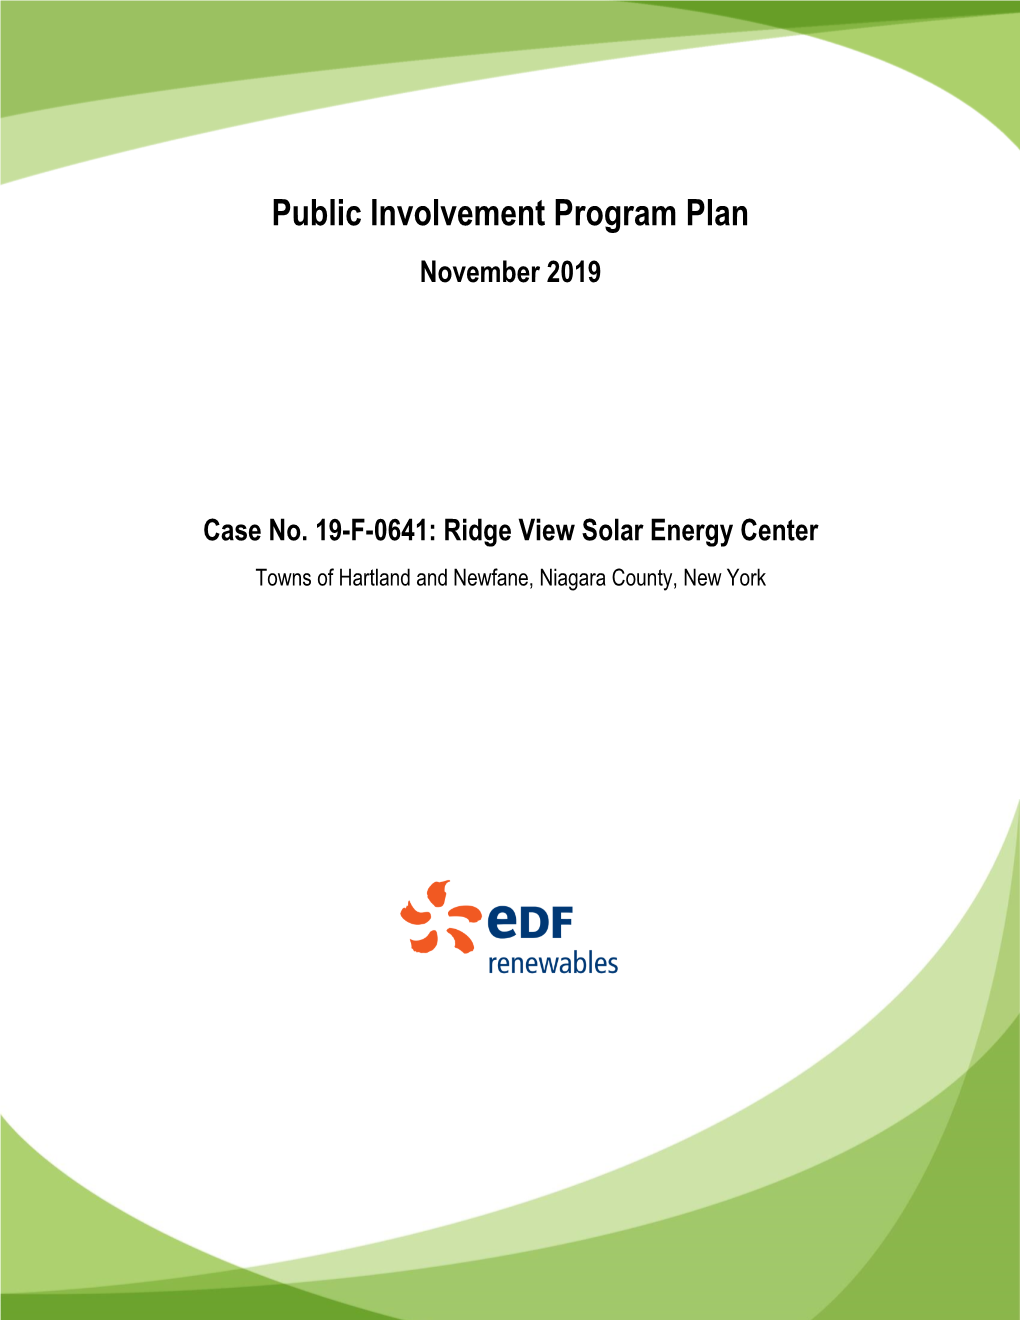 Public Involvement Program Plan November 2019